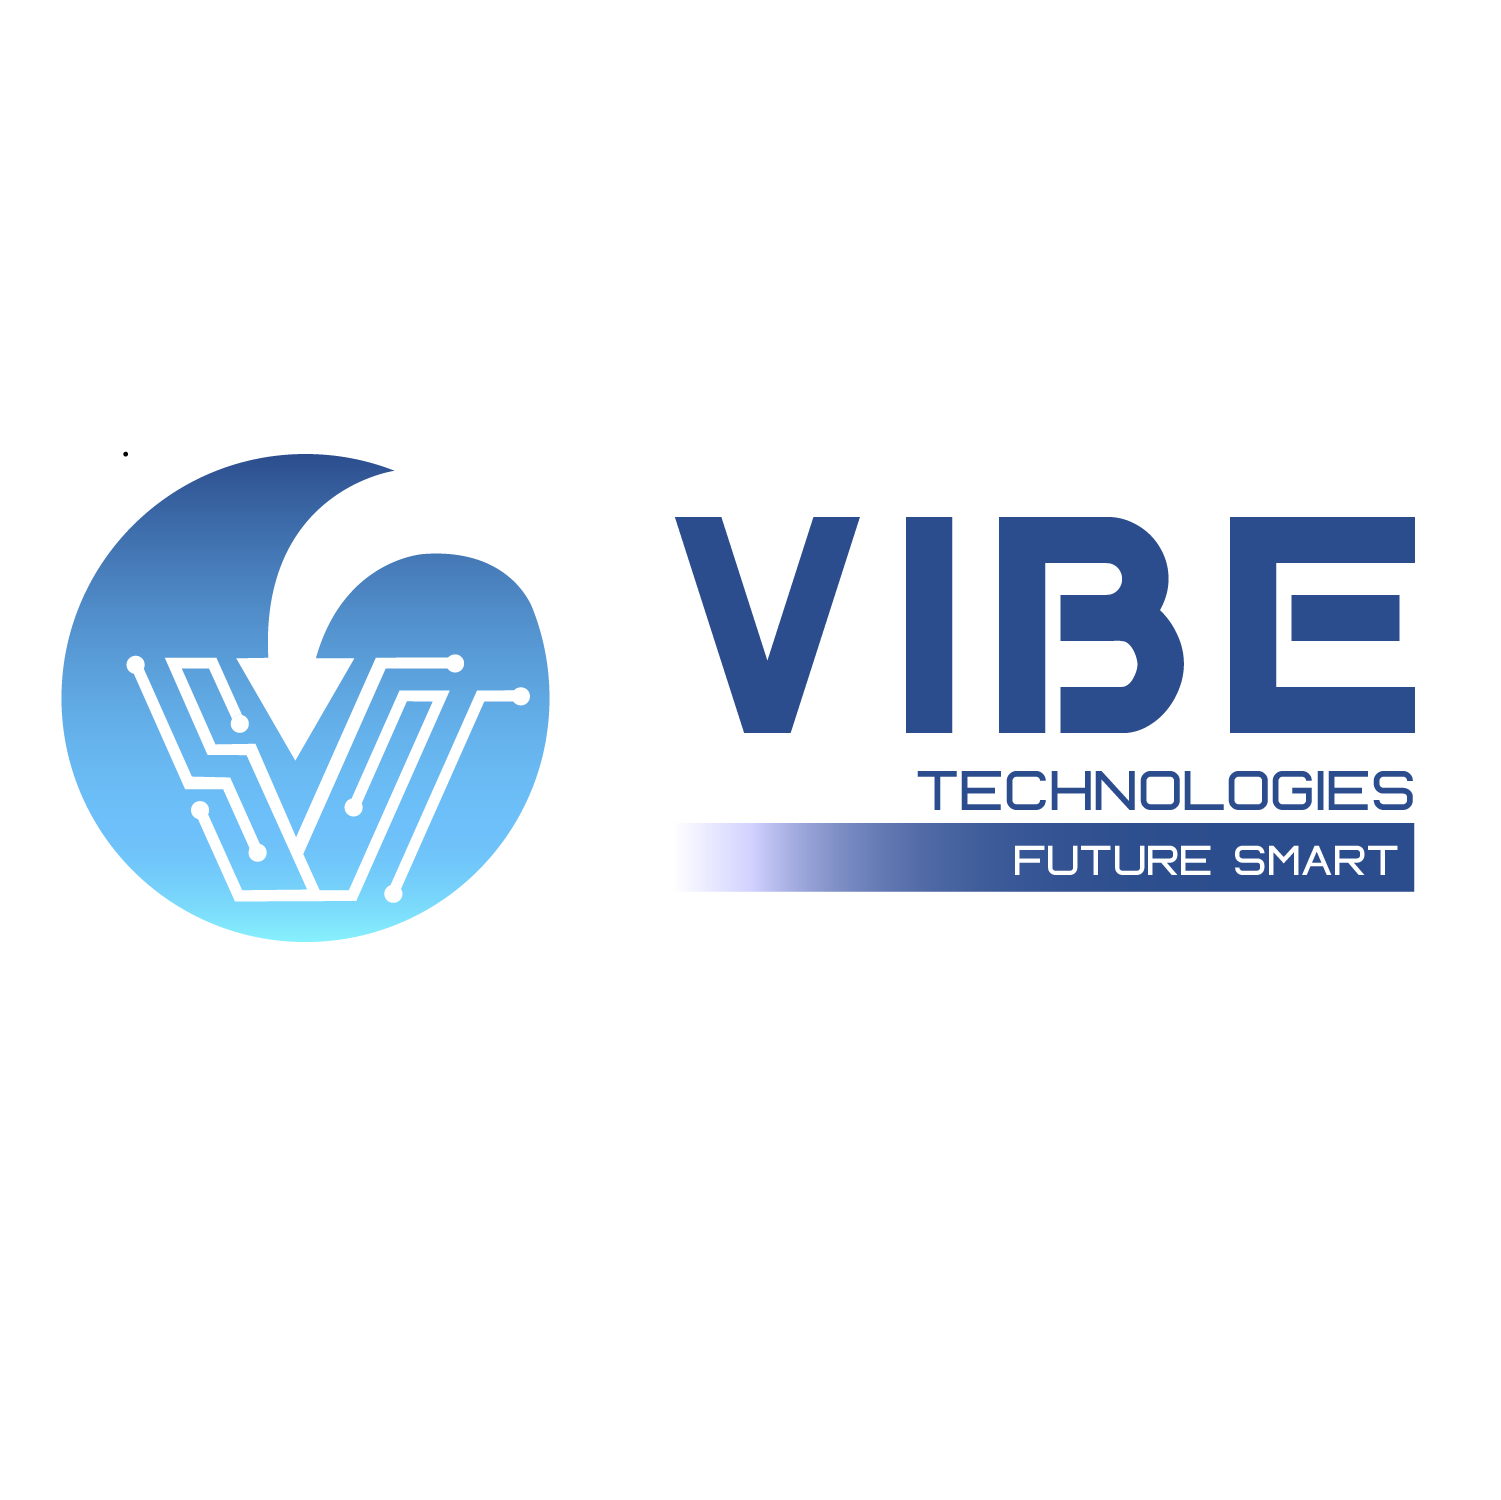 VVibe Technologies - Web Design Company in Bangalore